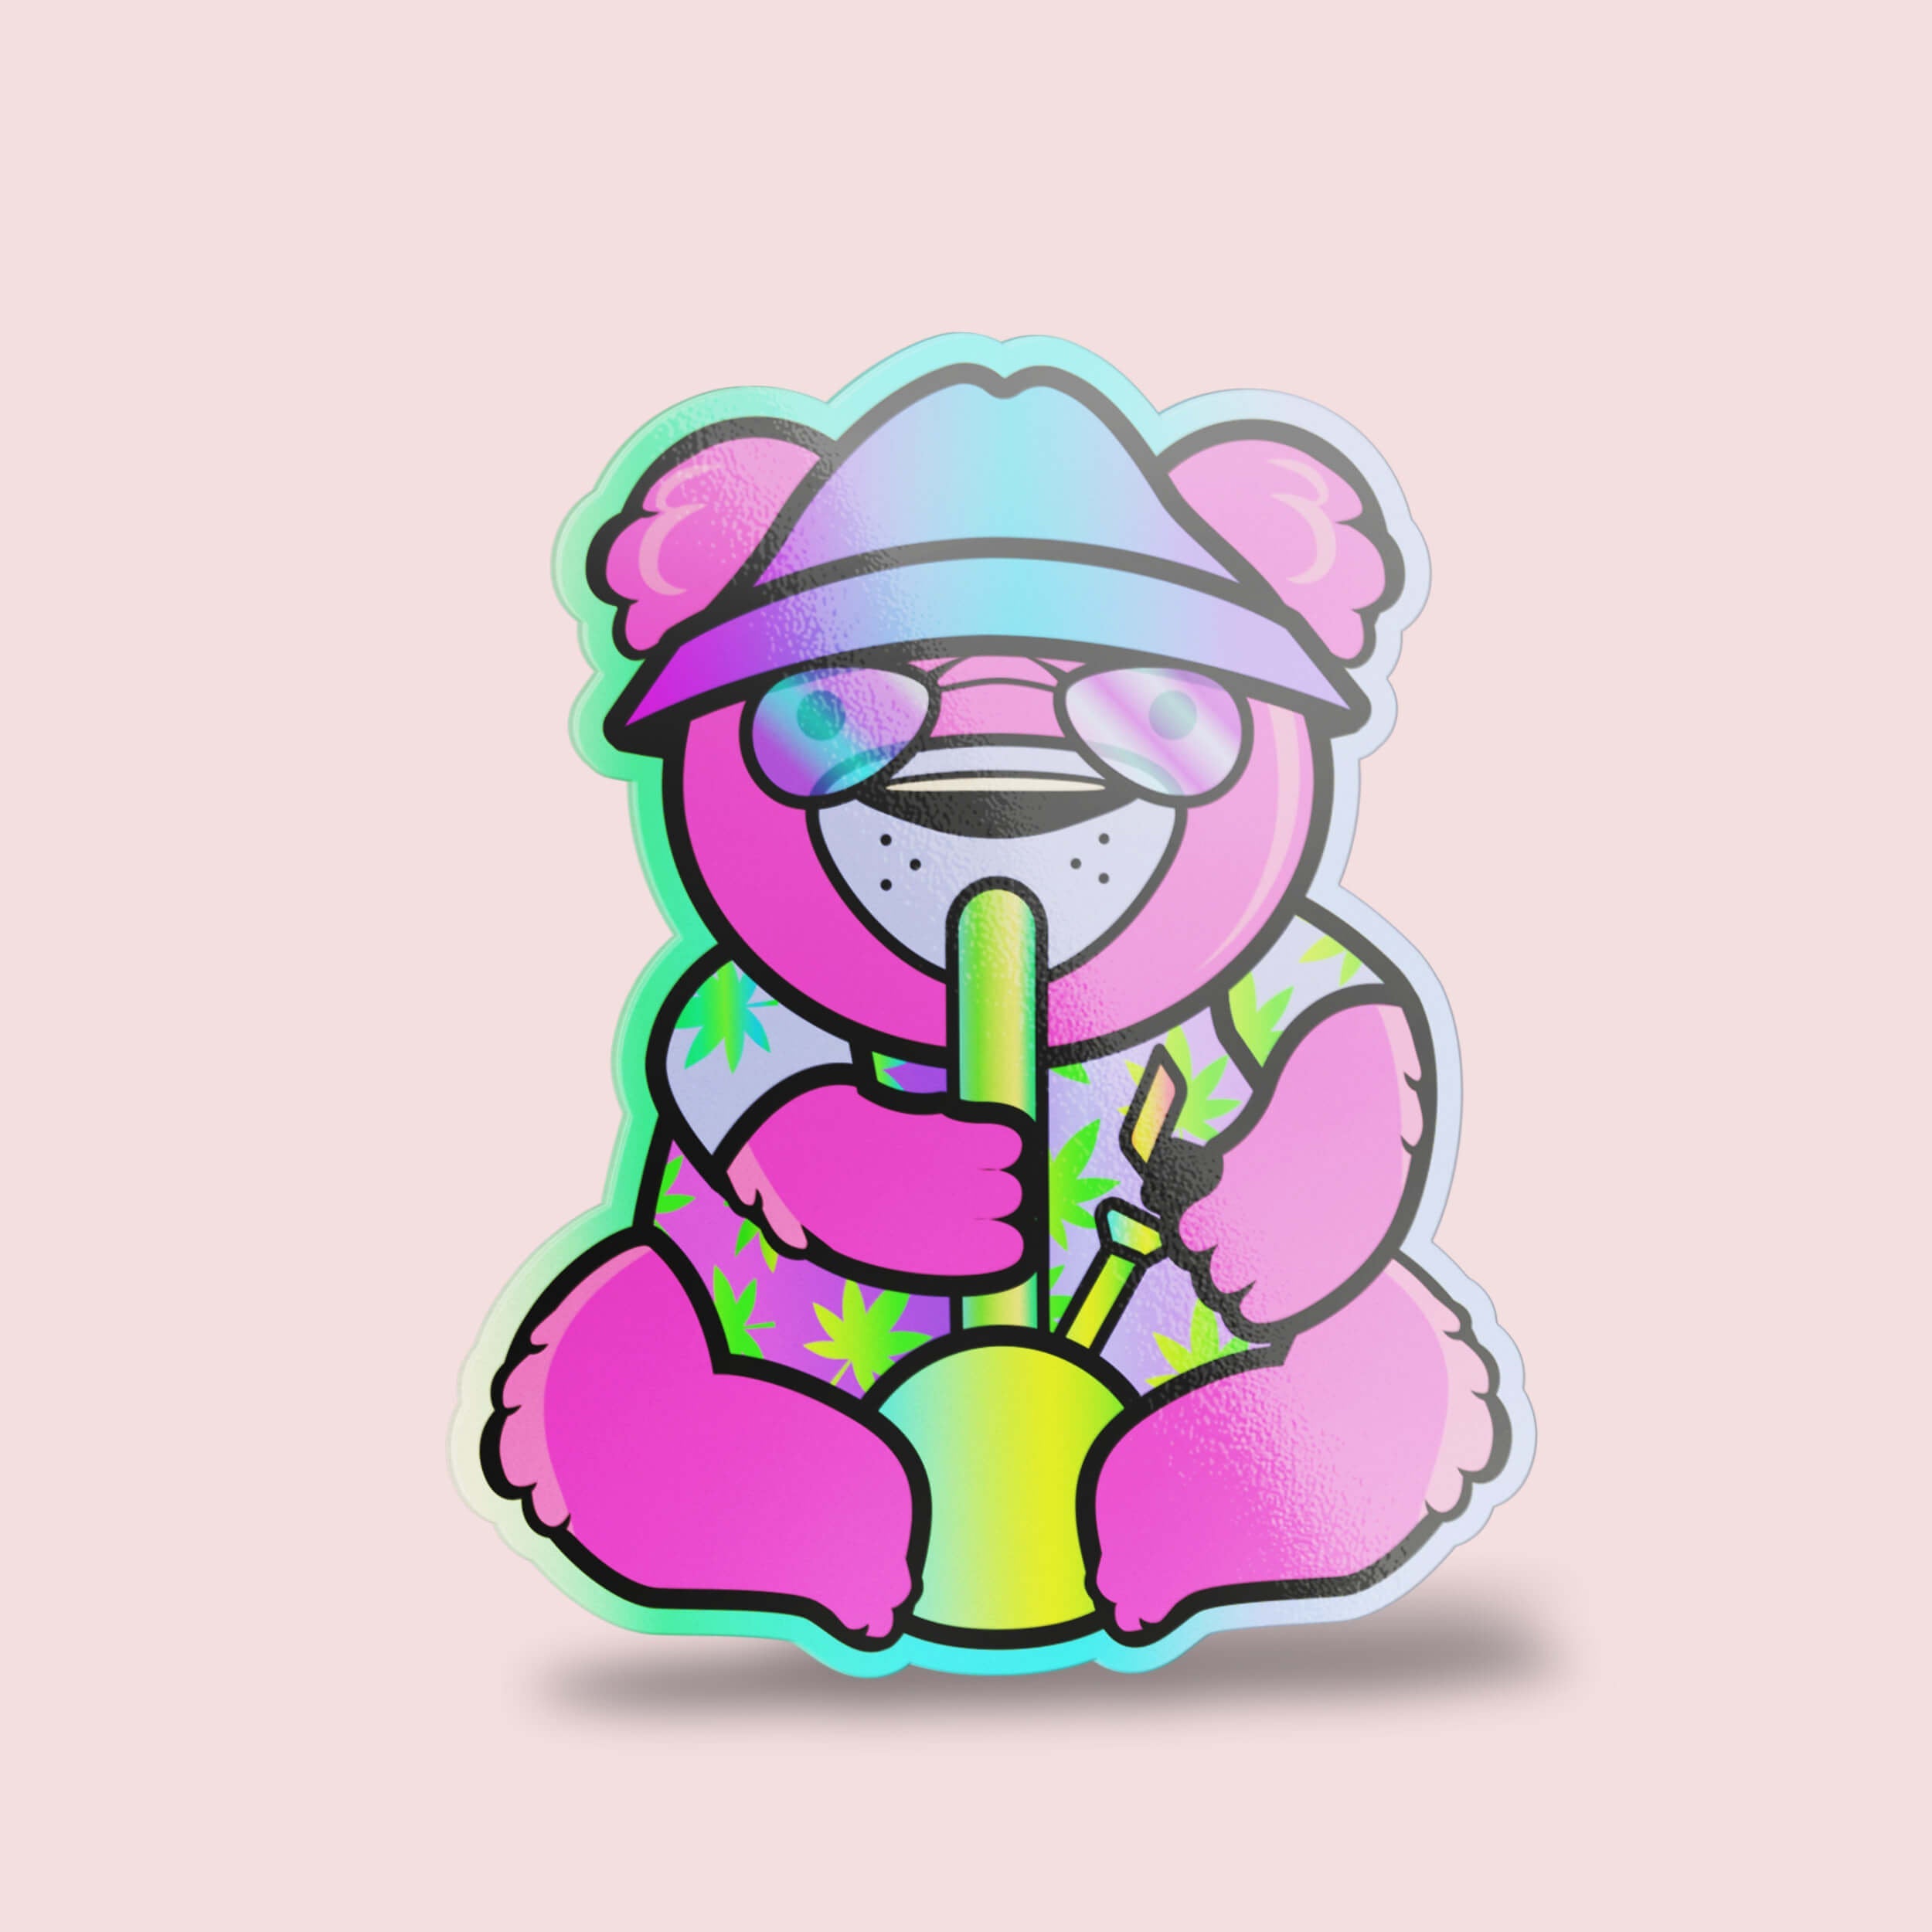 Smoking Bong Bear Premium Vinyl Sticker, 420 Stoner Stickers, Glossy Laptop Decal, Cannabis Vinyl Stickers